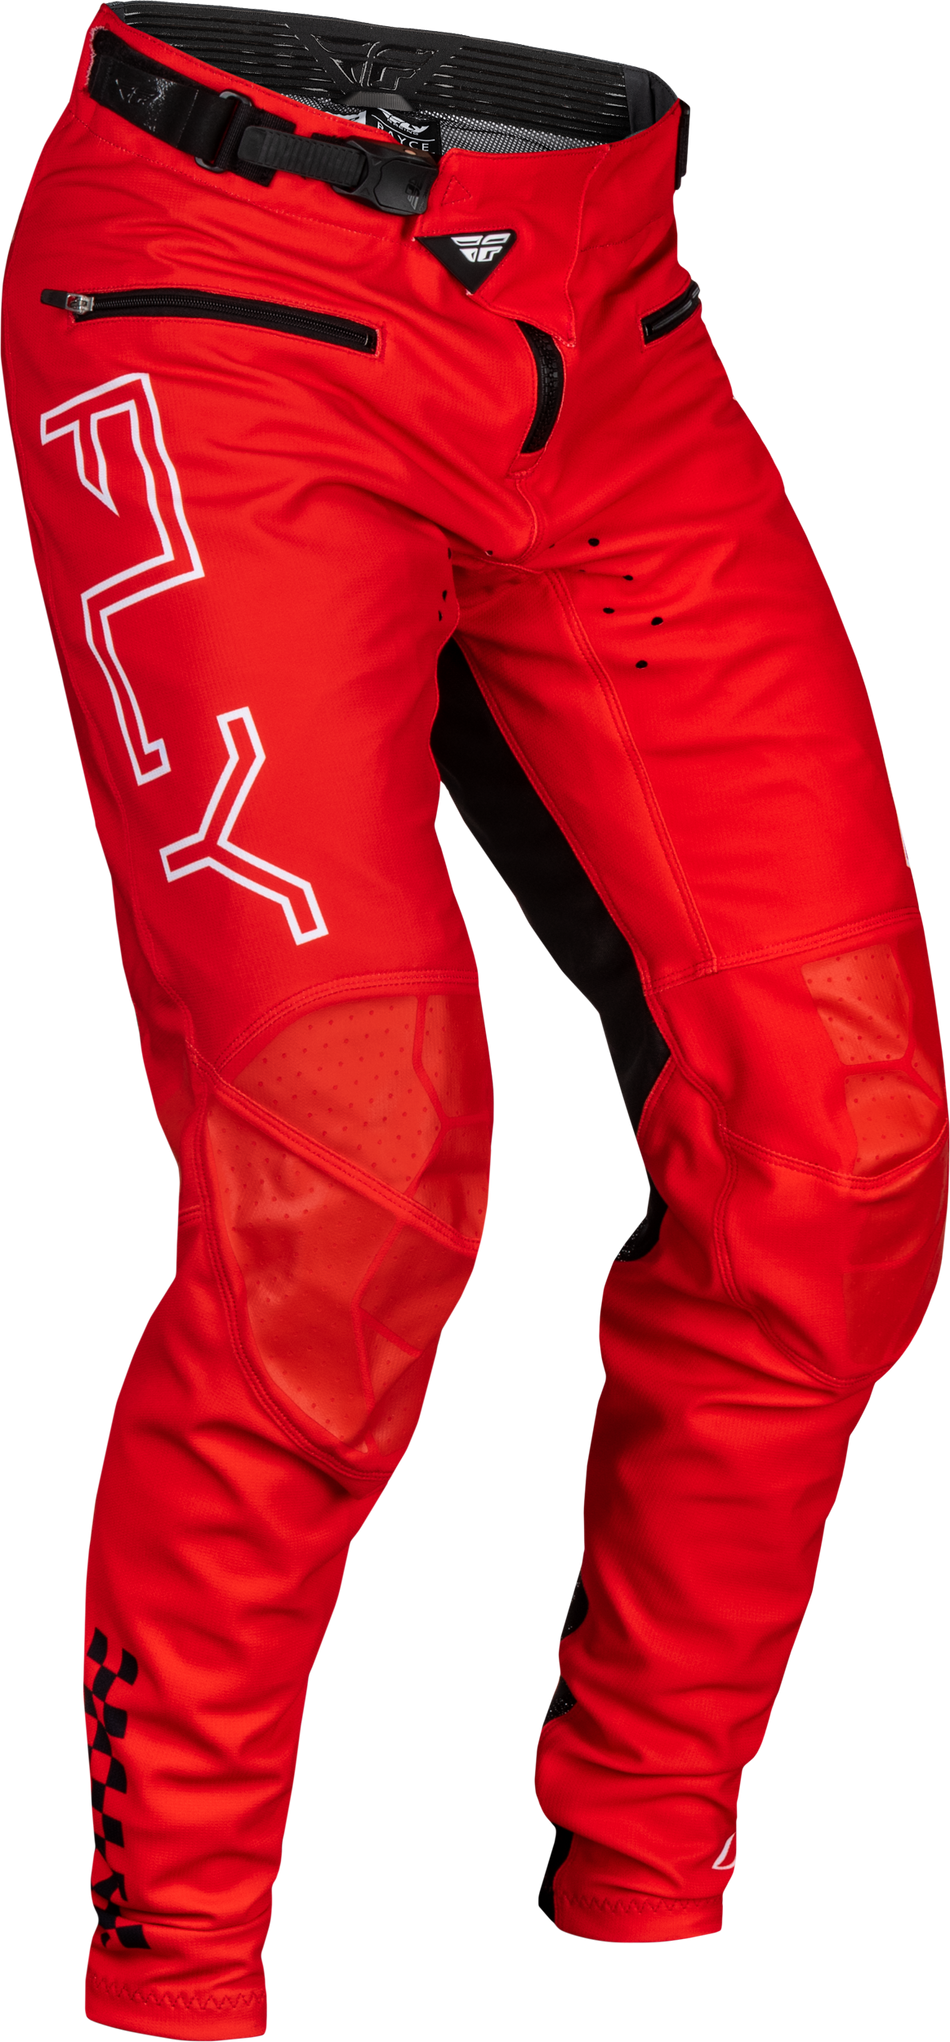 FLY RACING Rayce Bicycle Pants Red Sz 32 377-06332